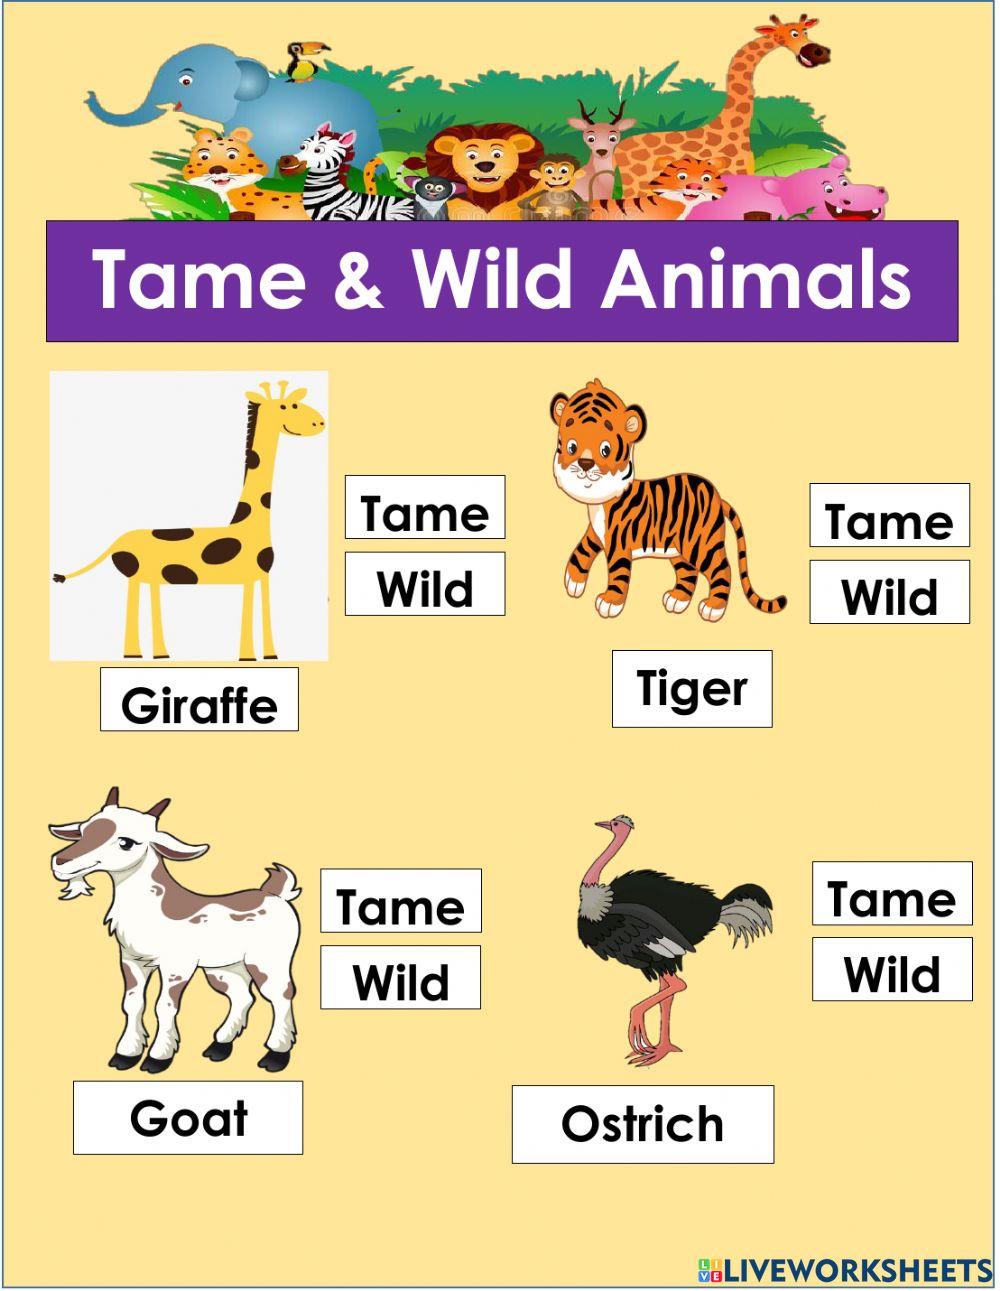 Tame & Wild Animals